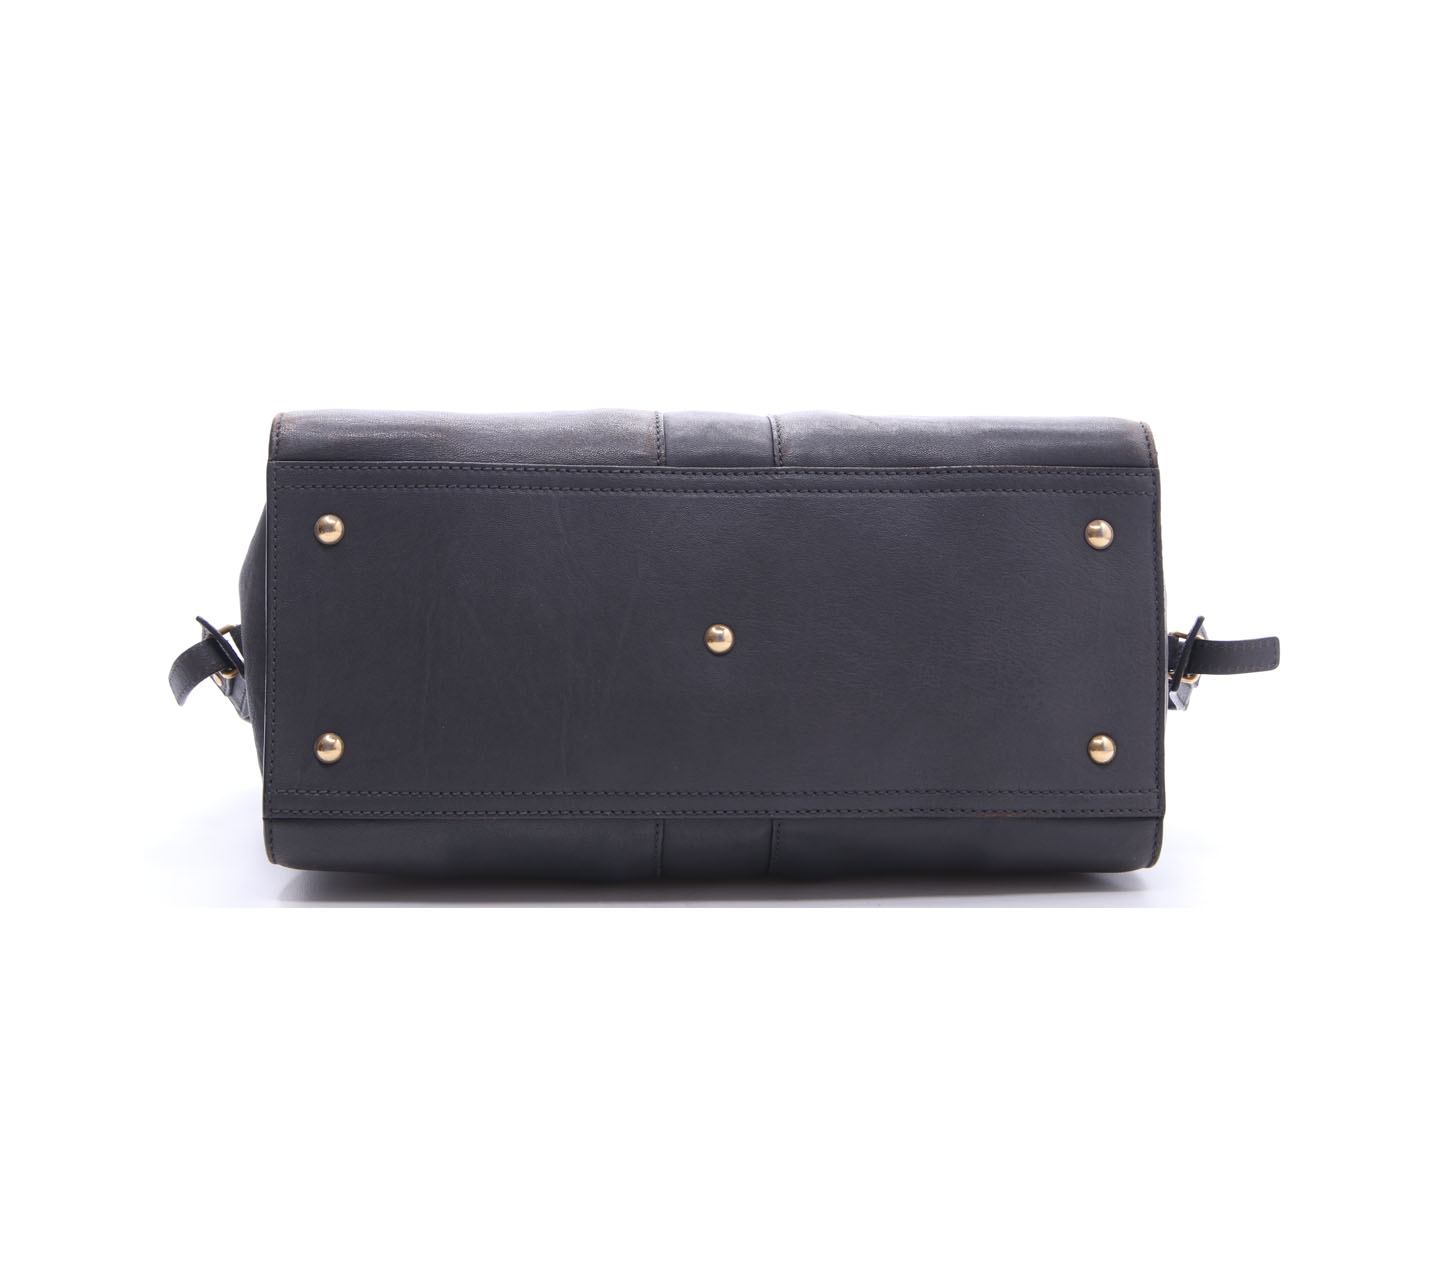 Yves Saint Laurent Grey Sheepskin Leather Large Cabas Handbag